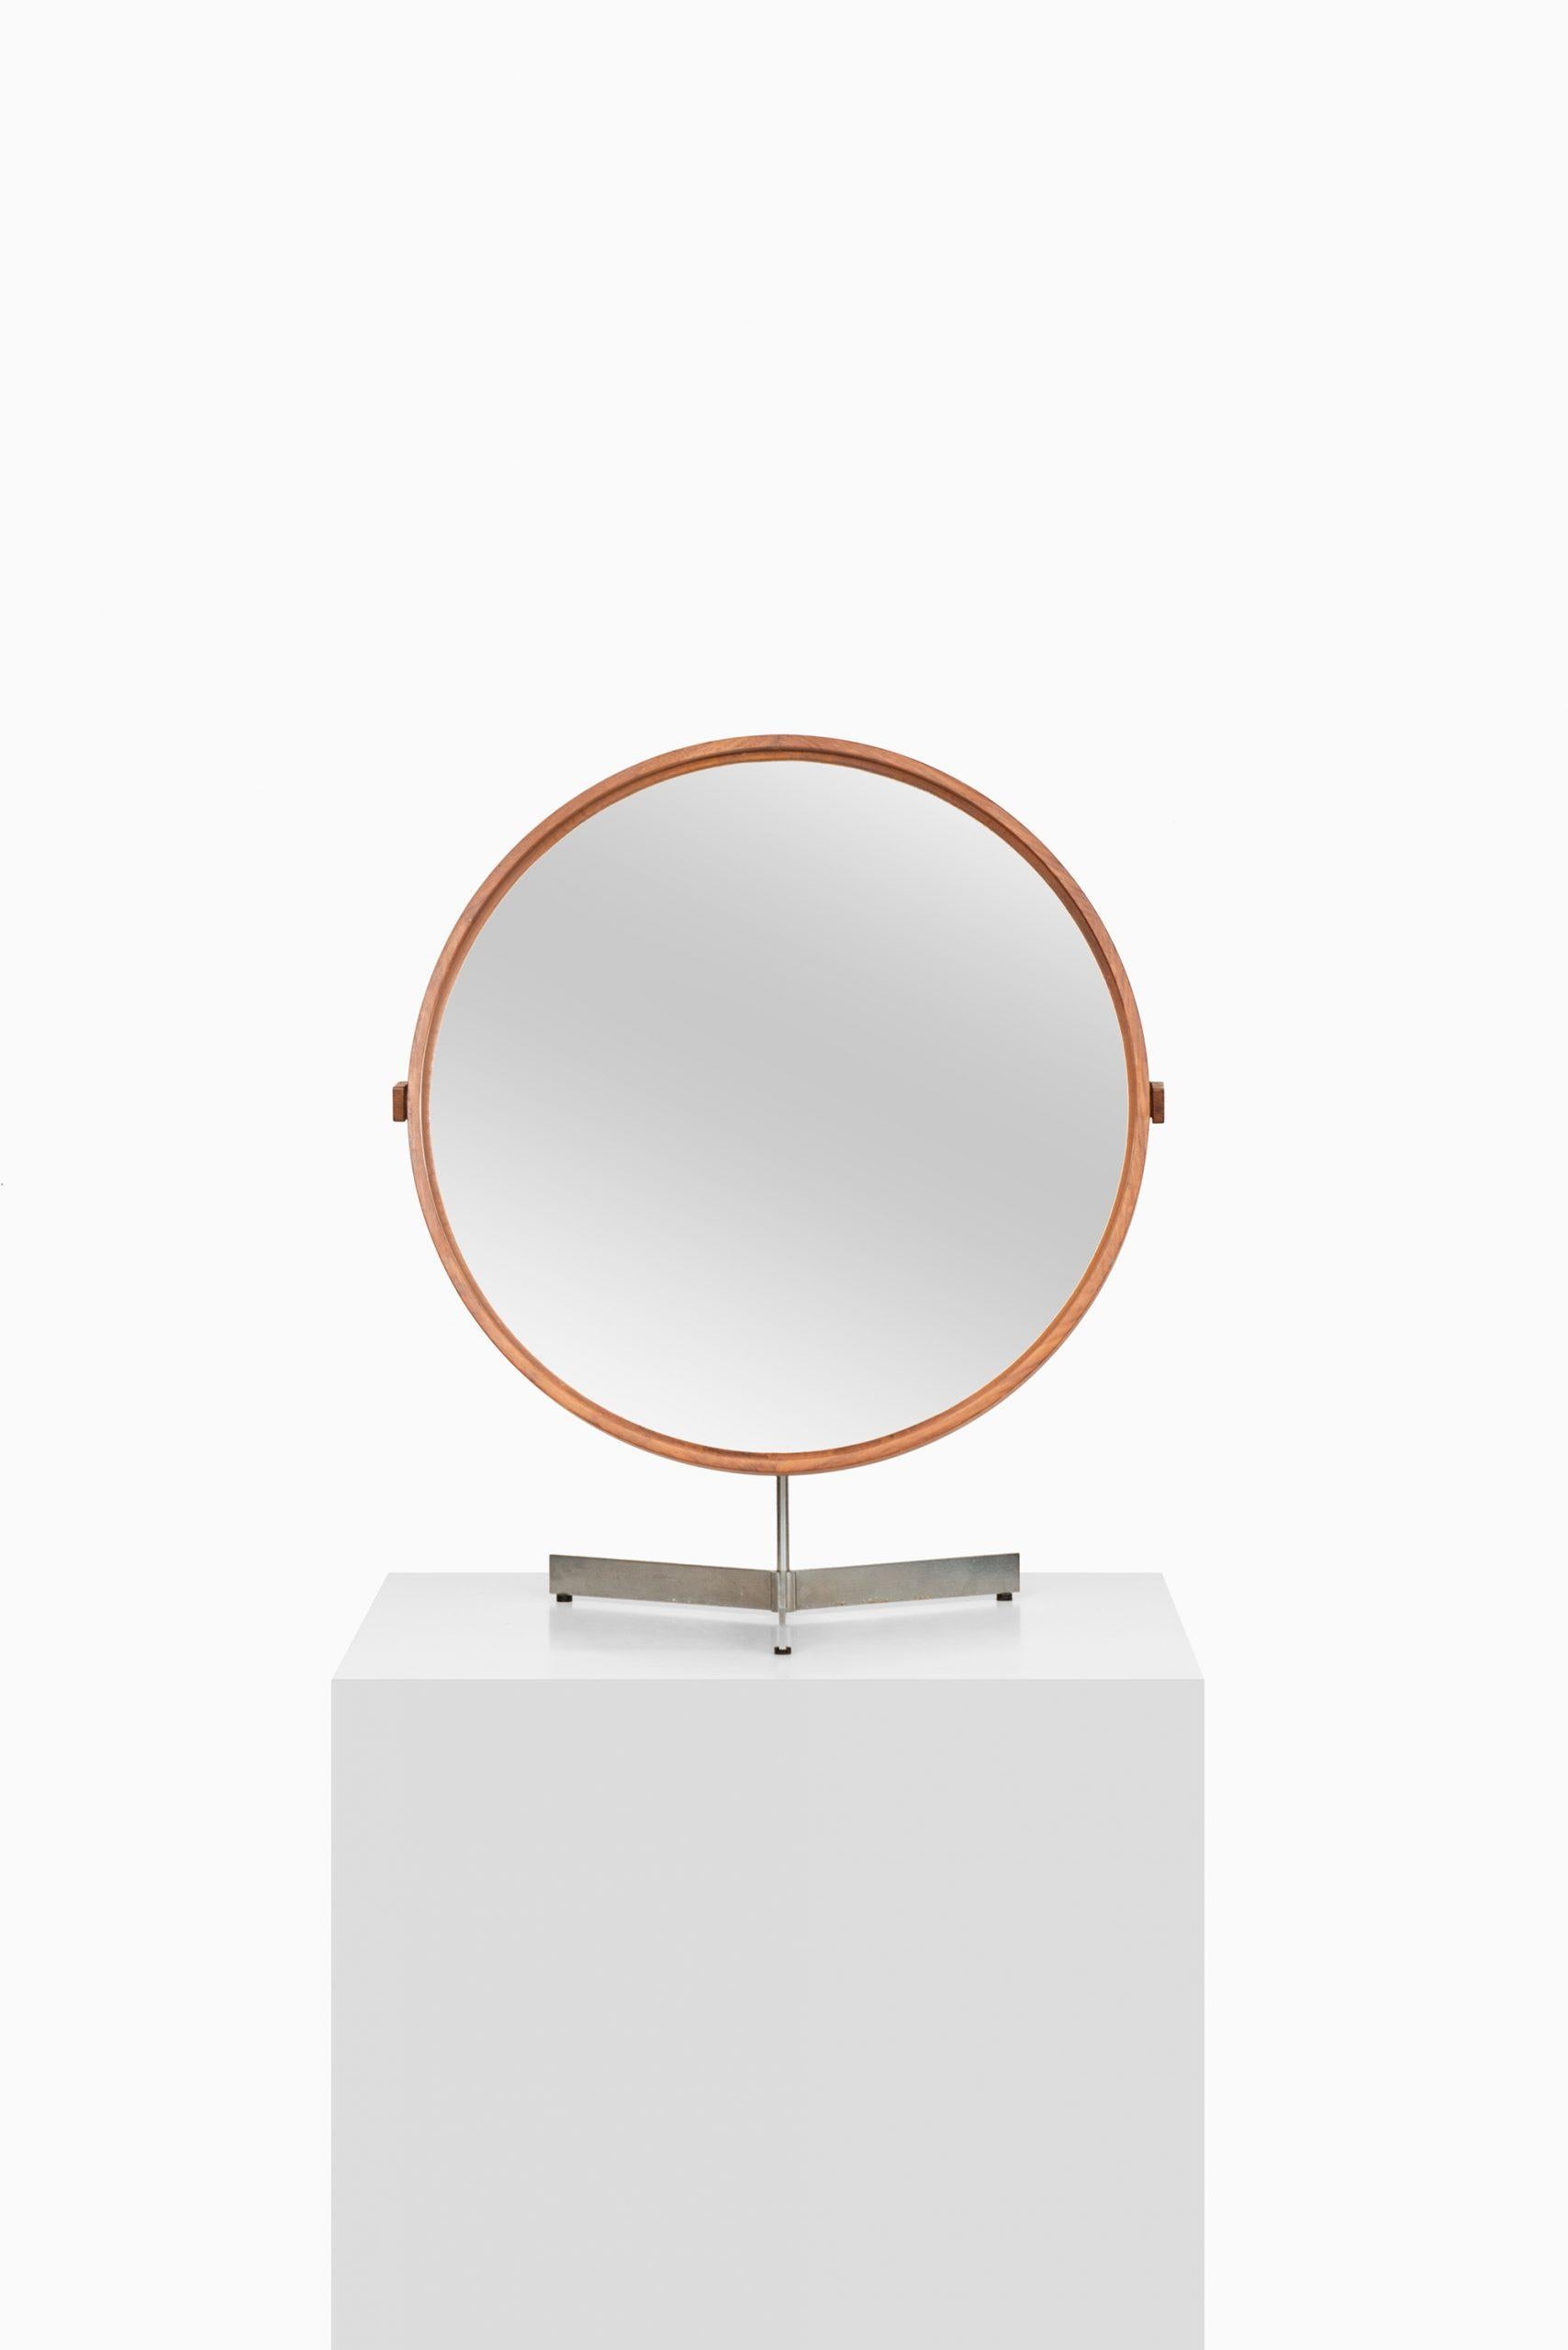 Swedish Uno & Östen Kristiansson Table Mirror Produced by Luxus in Vittsjö, Sweden For Sale